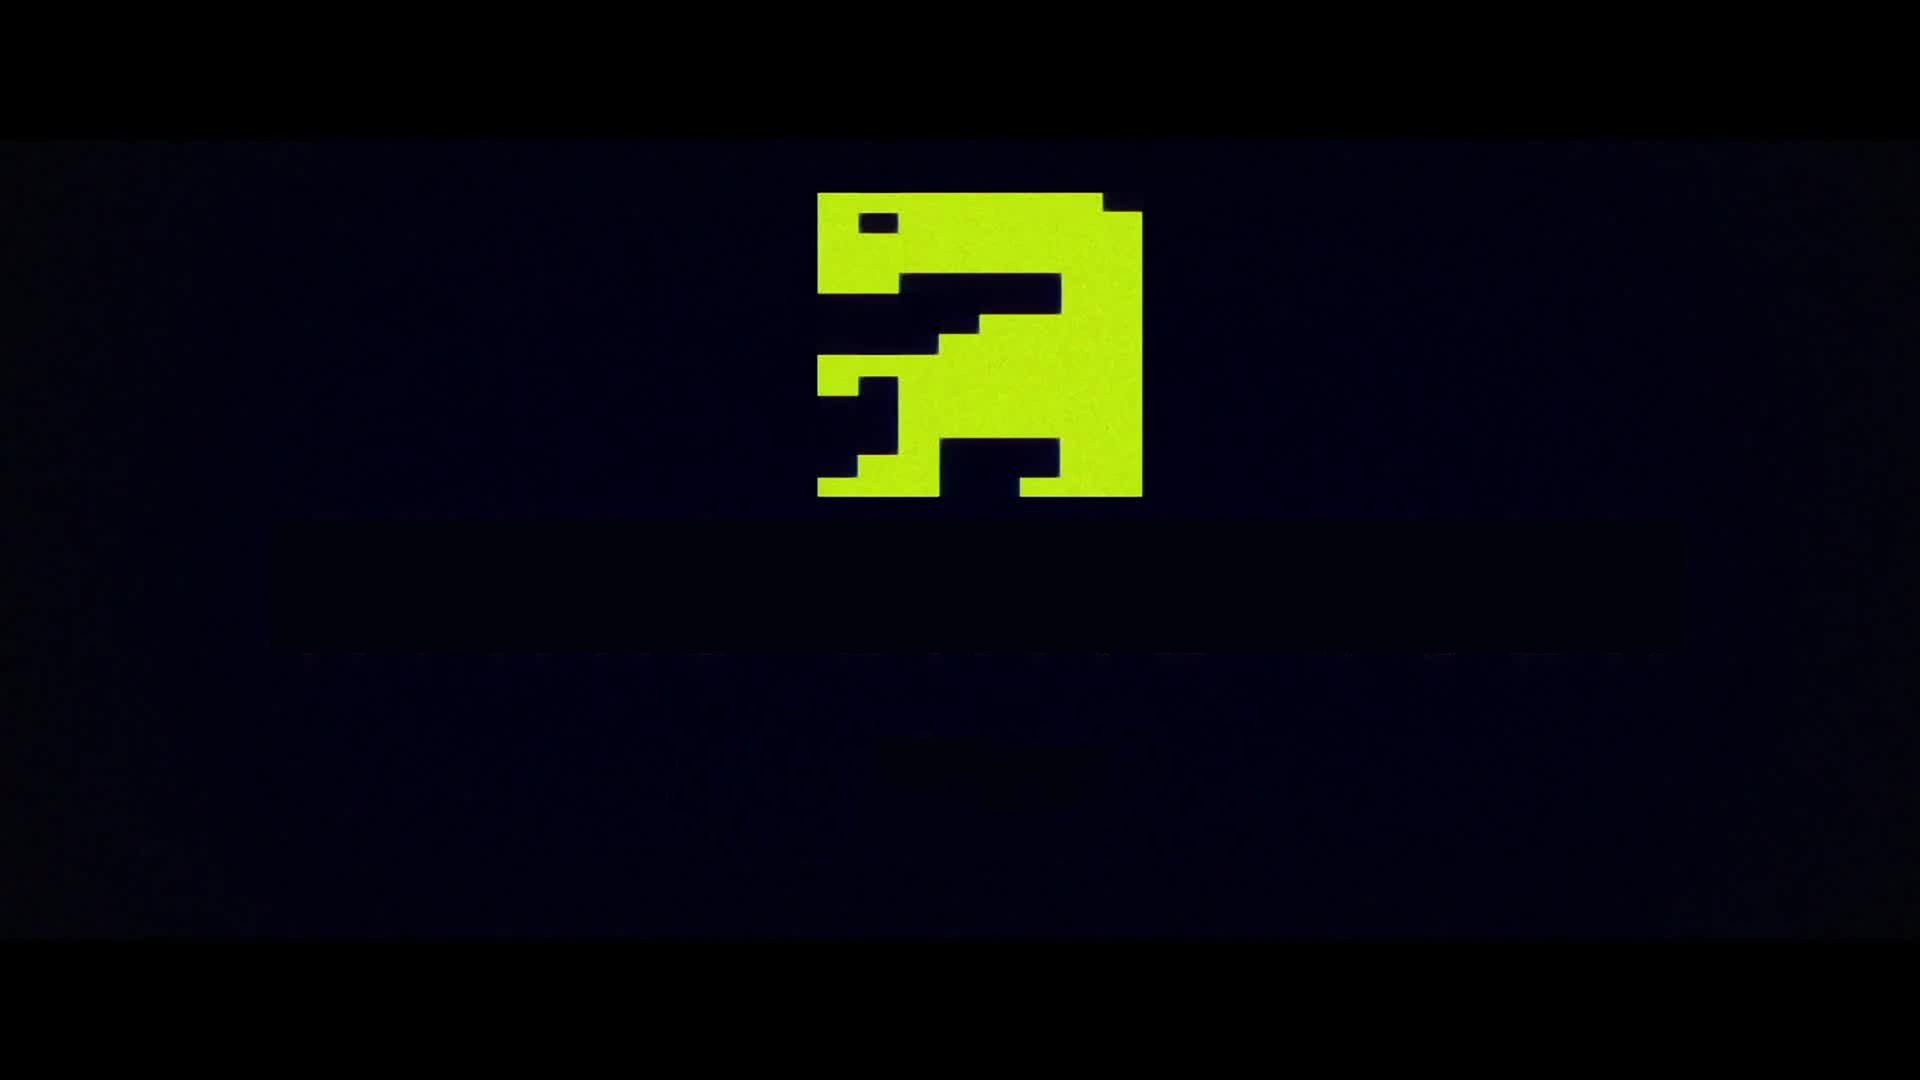 Atari: Game Over background